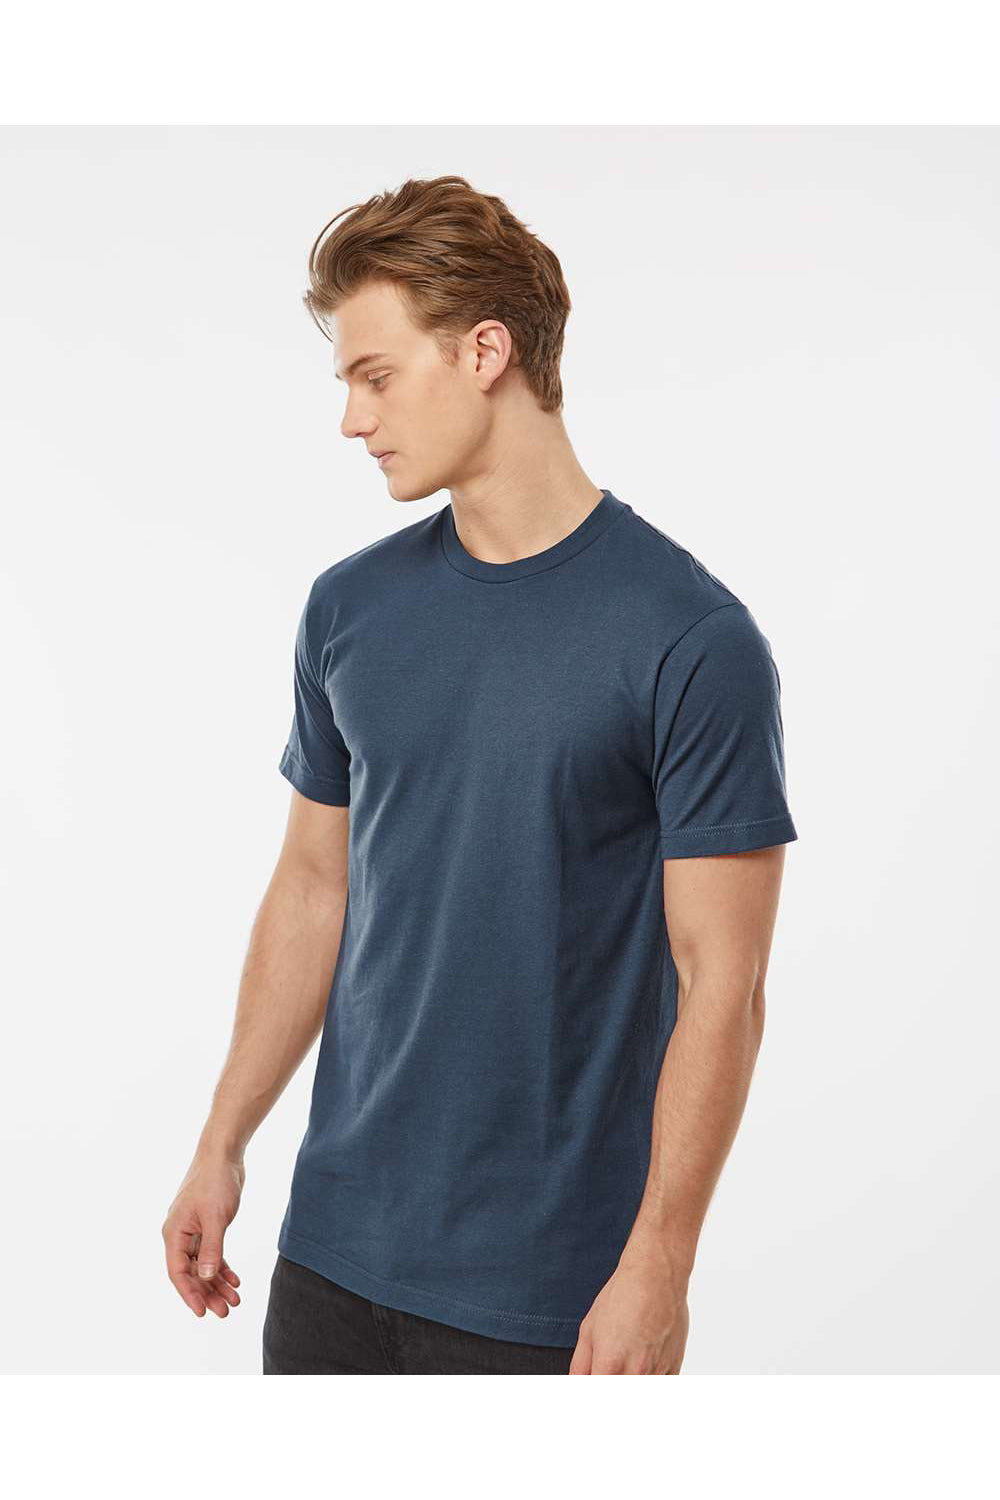 Tultex 202 Mens Fine Jersey Short Sleeve Crewneck T-Shirt Indigo Blue Model Side